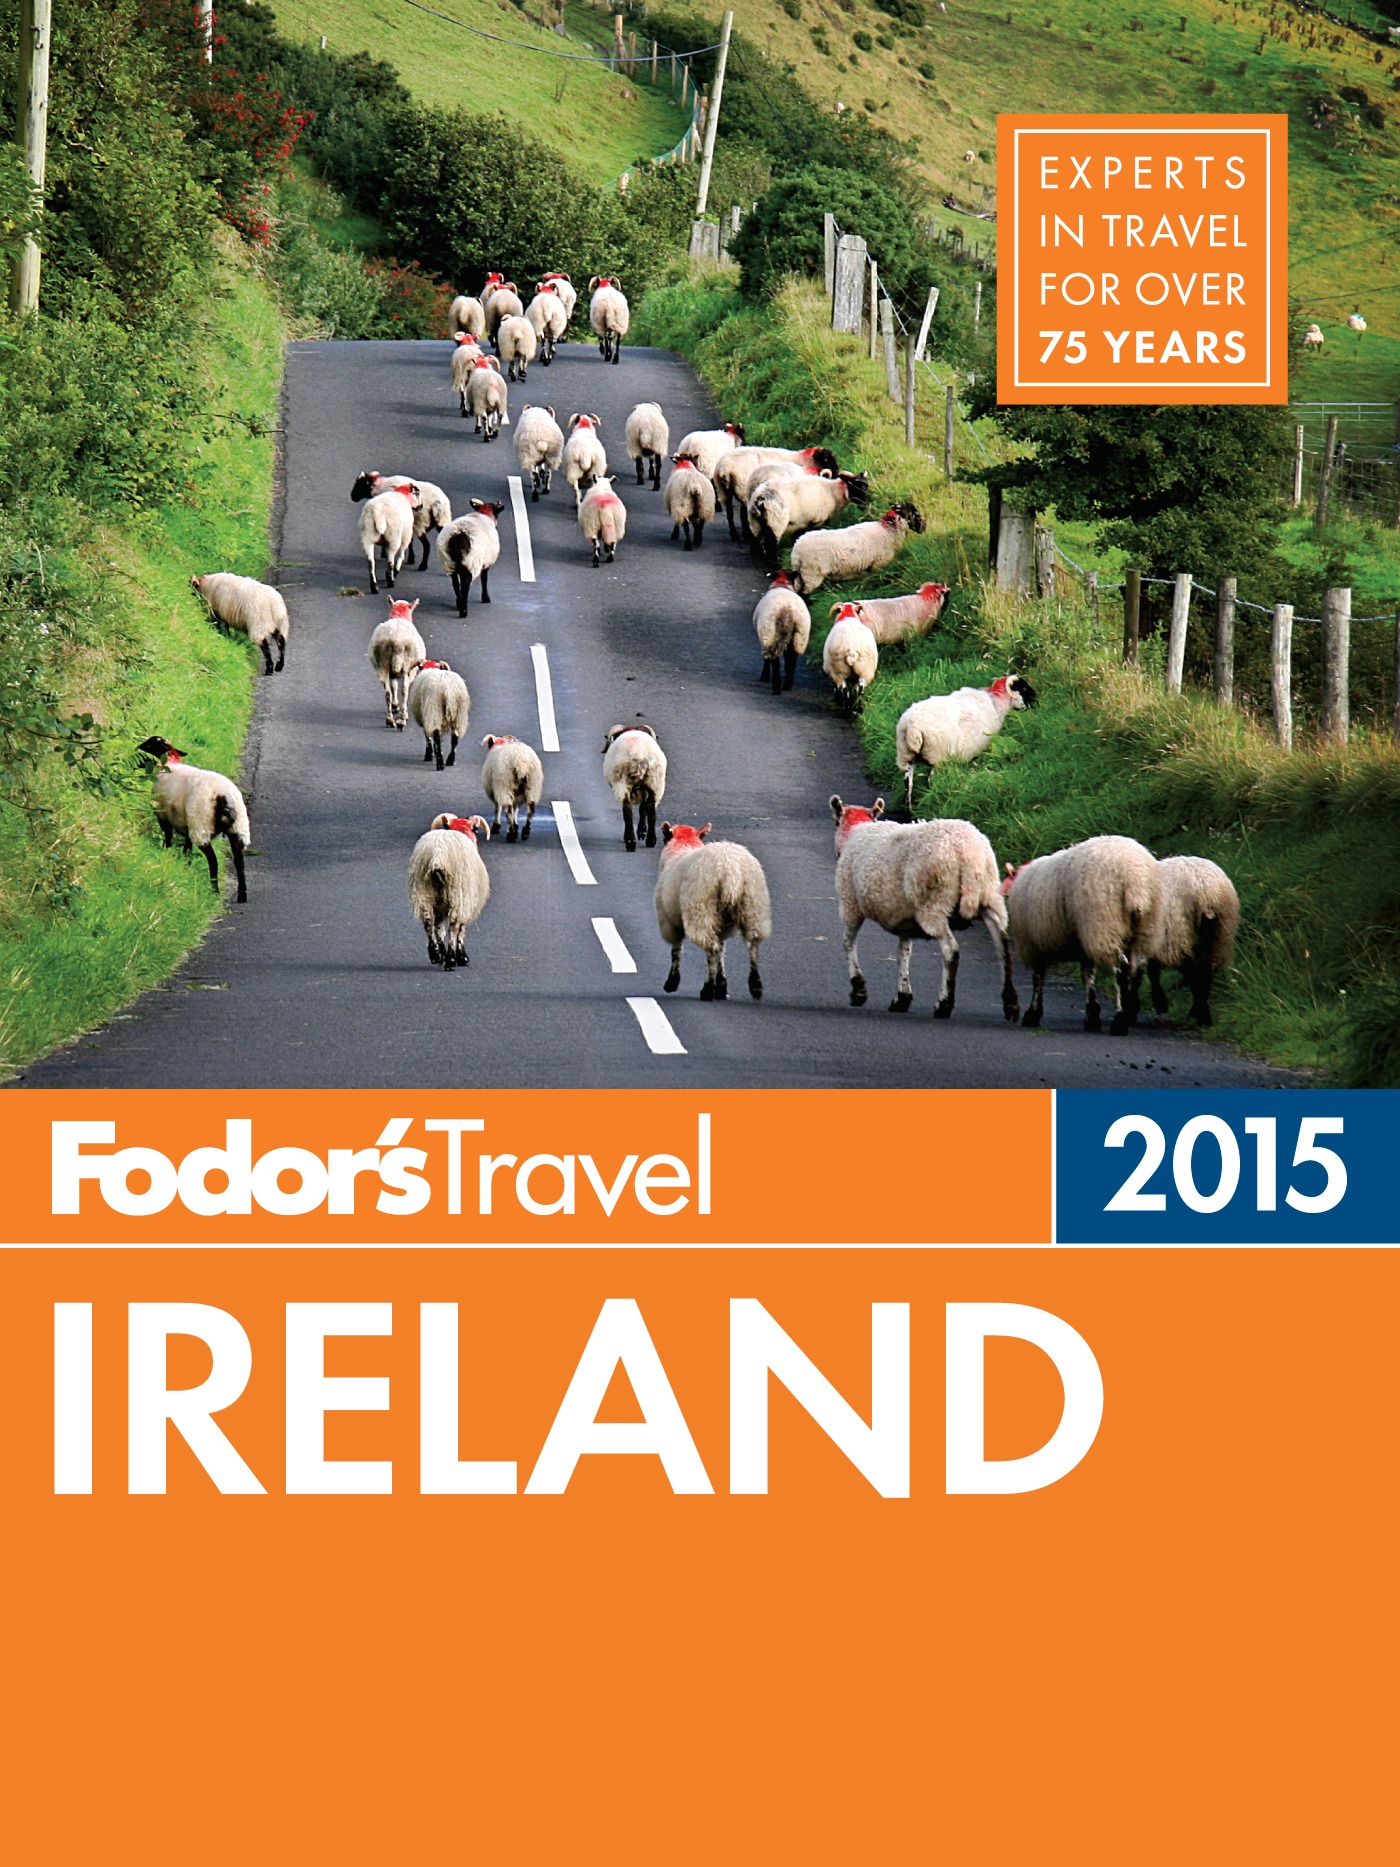 Fodor's Ireland 2015 cover image